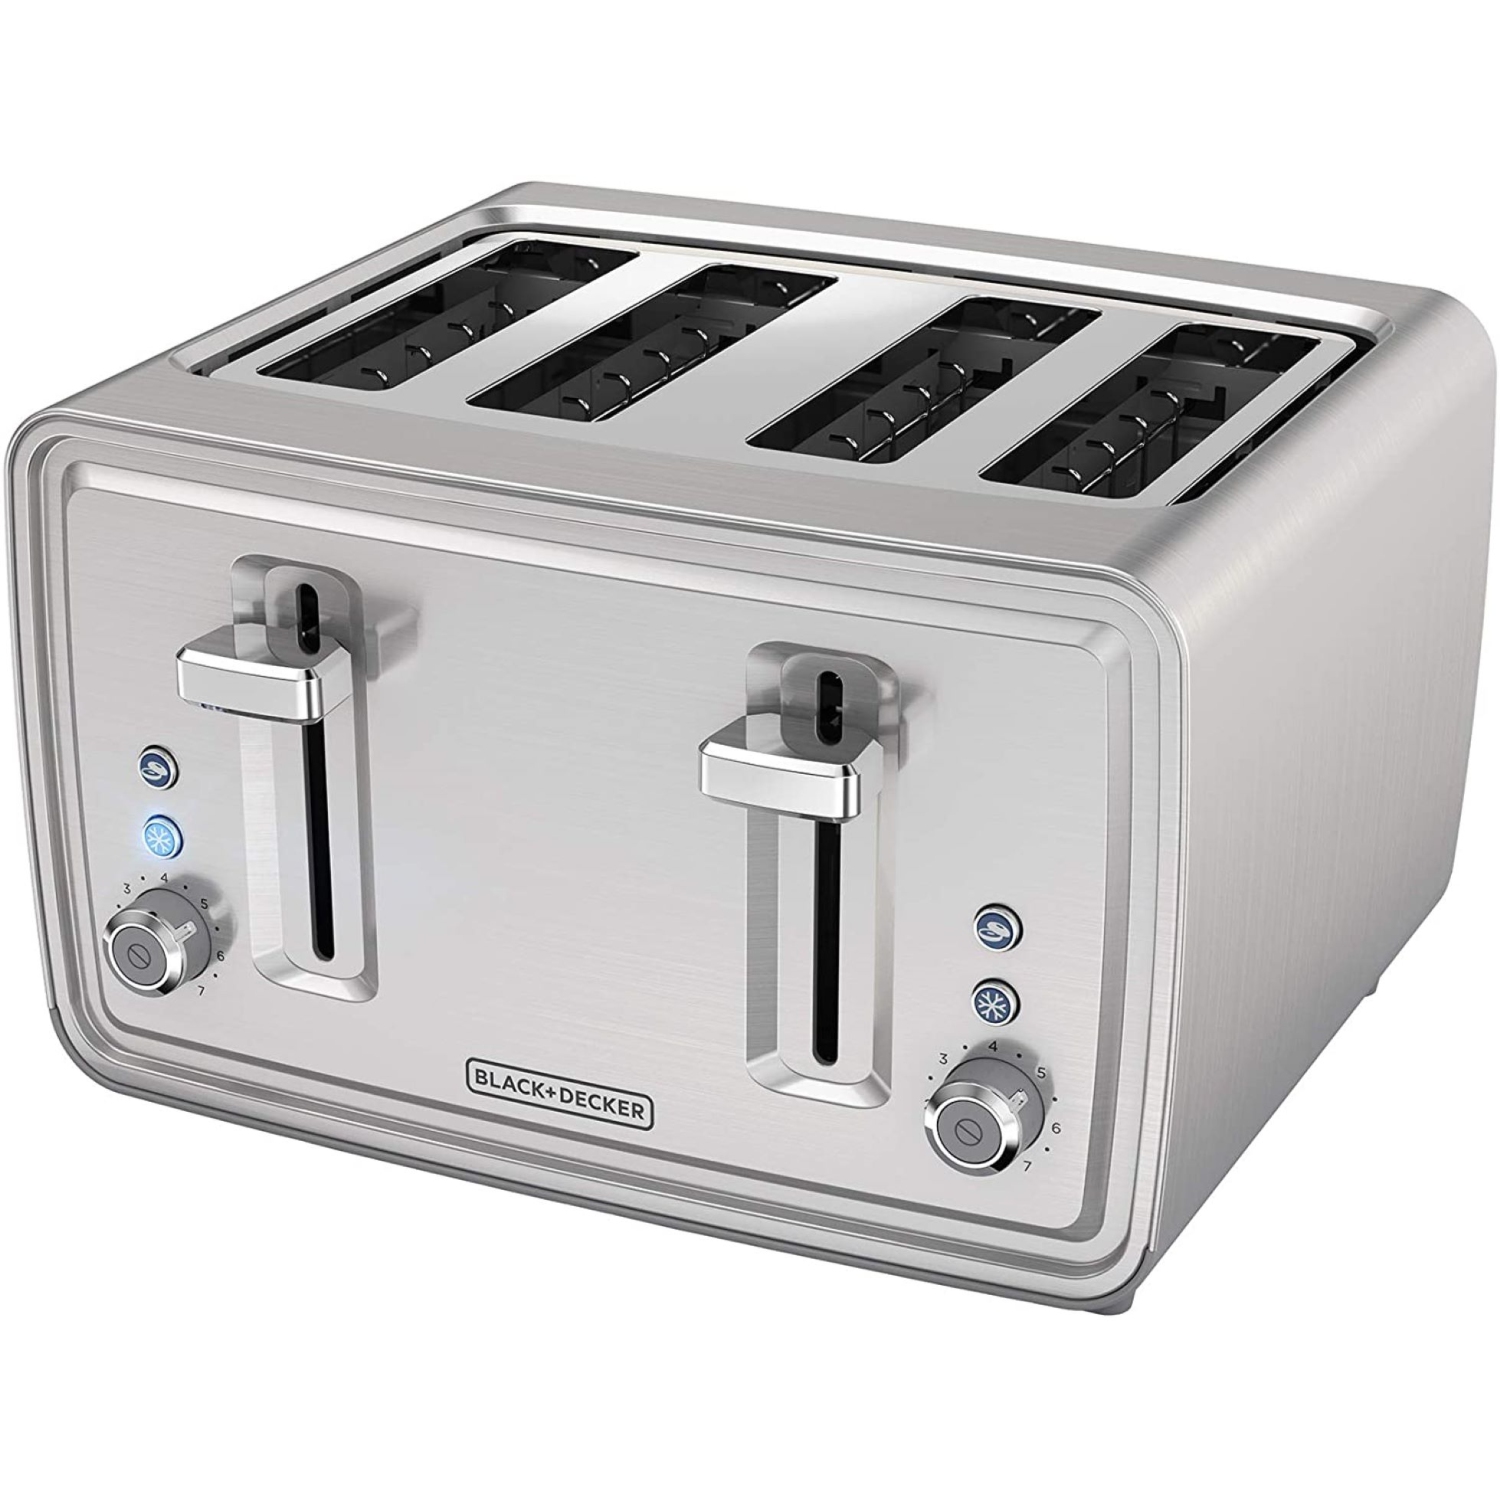 Applica TR4900SSD Black & Decker 4 Slice Toaster - Silver